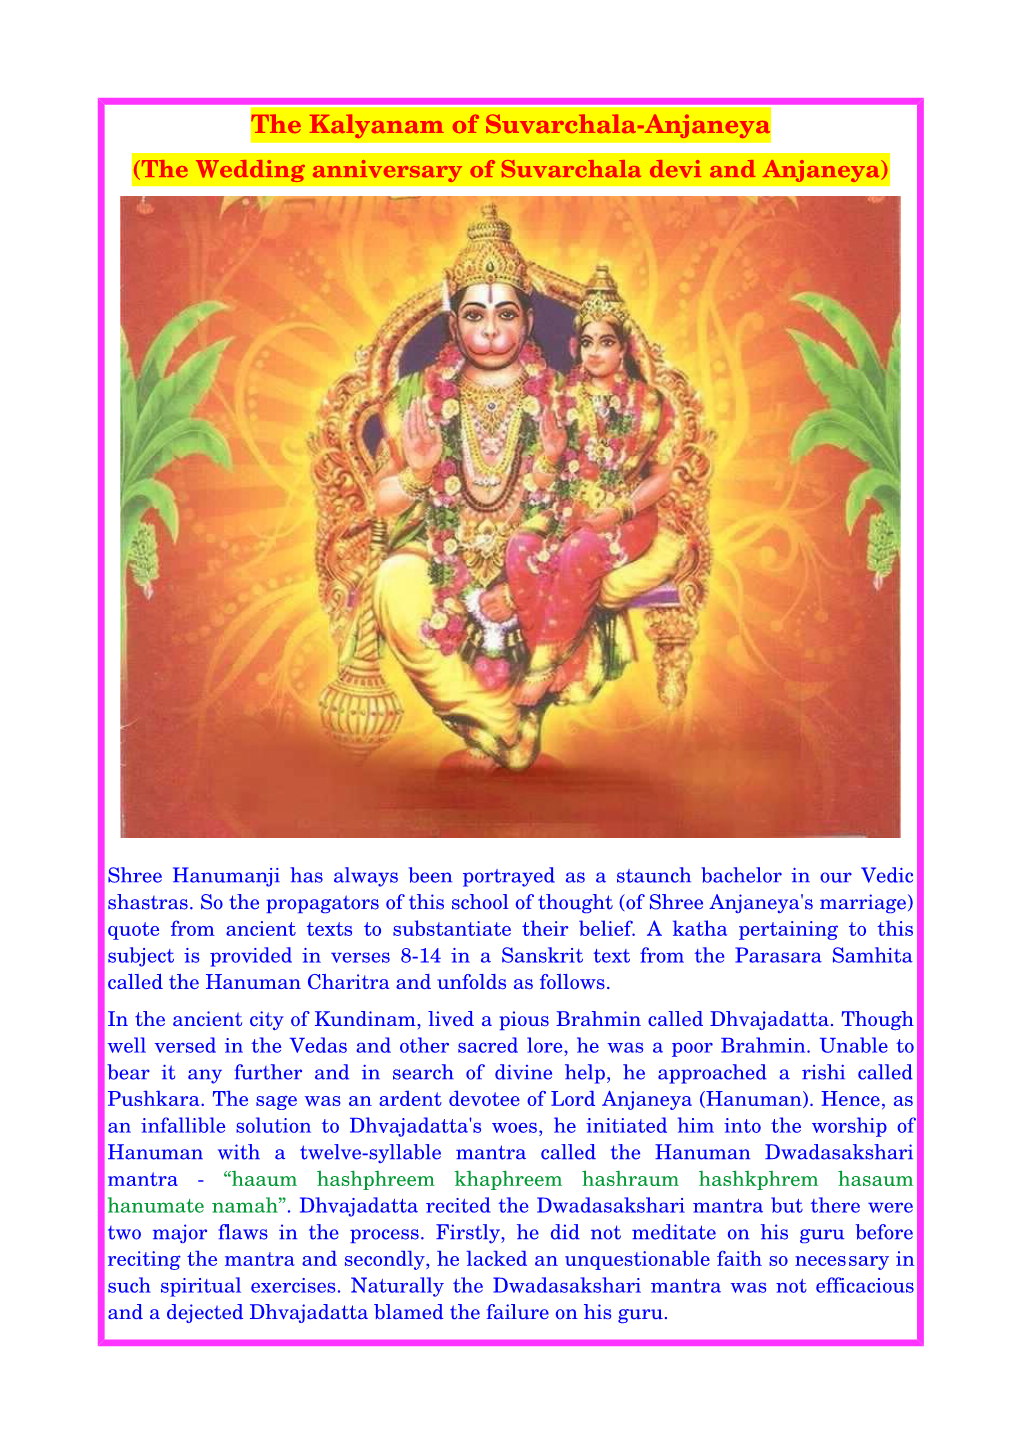 The Kalyanam of Suvarchala-Anjaneya (The Wedding Anniversary of Suvarchala Devi and Anjaneya)